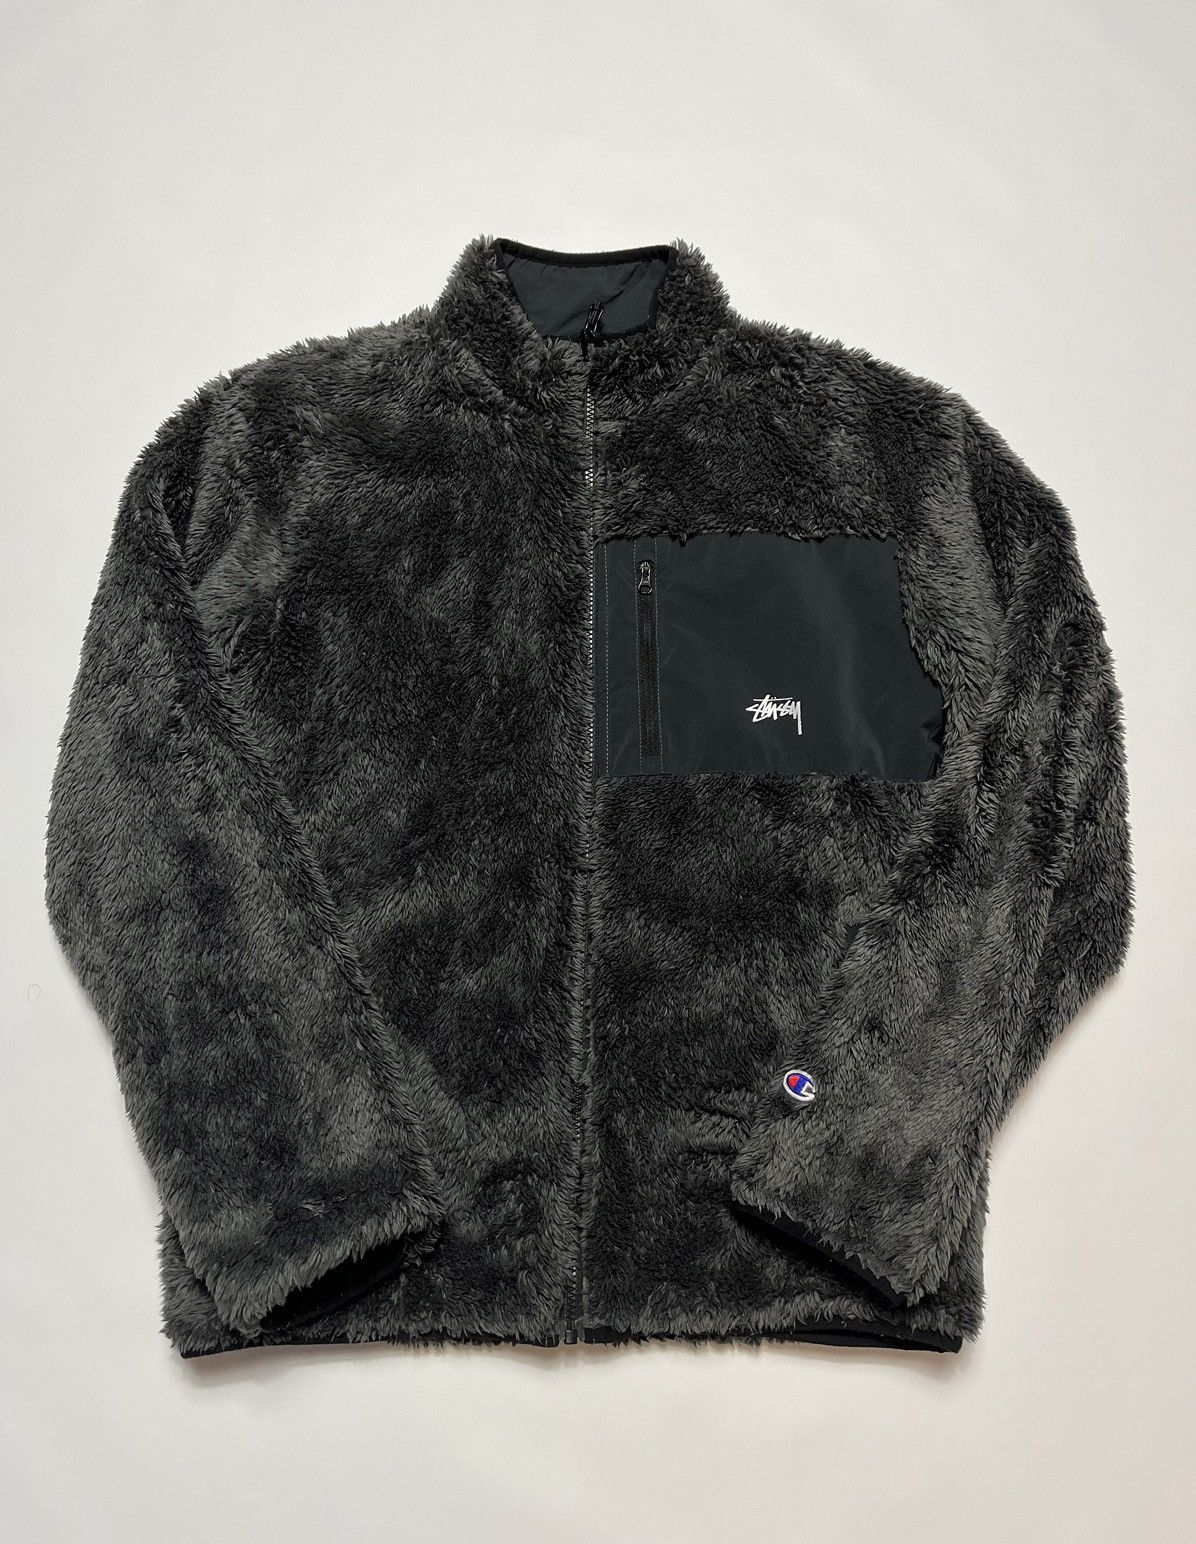 Stussy Stussy x Champion reversible sherpa fleece jacket 2016